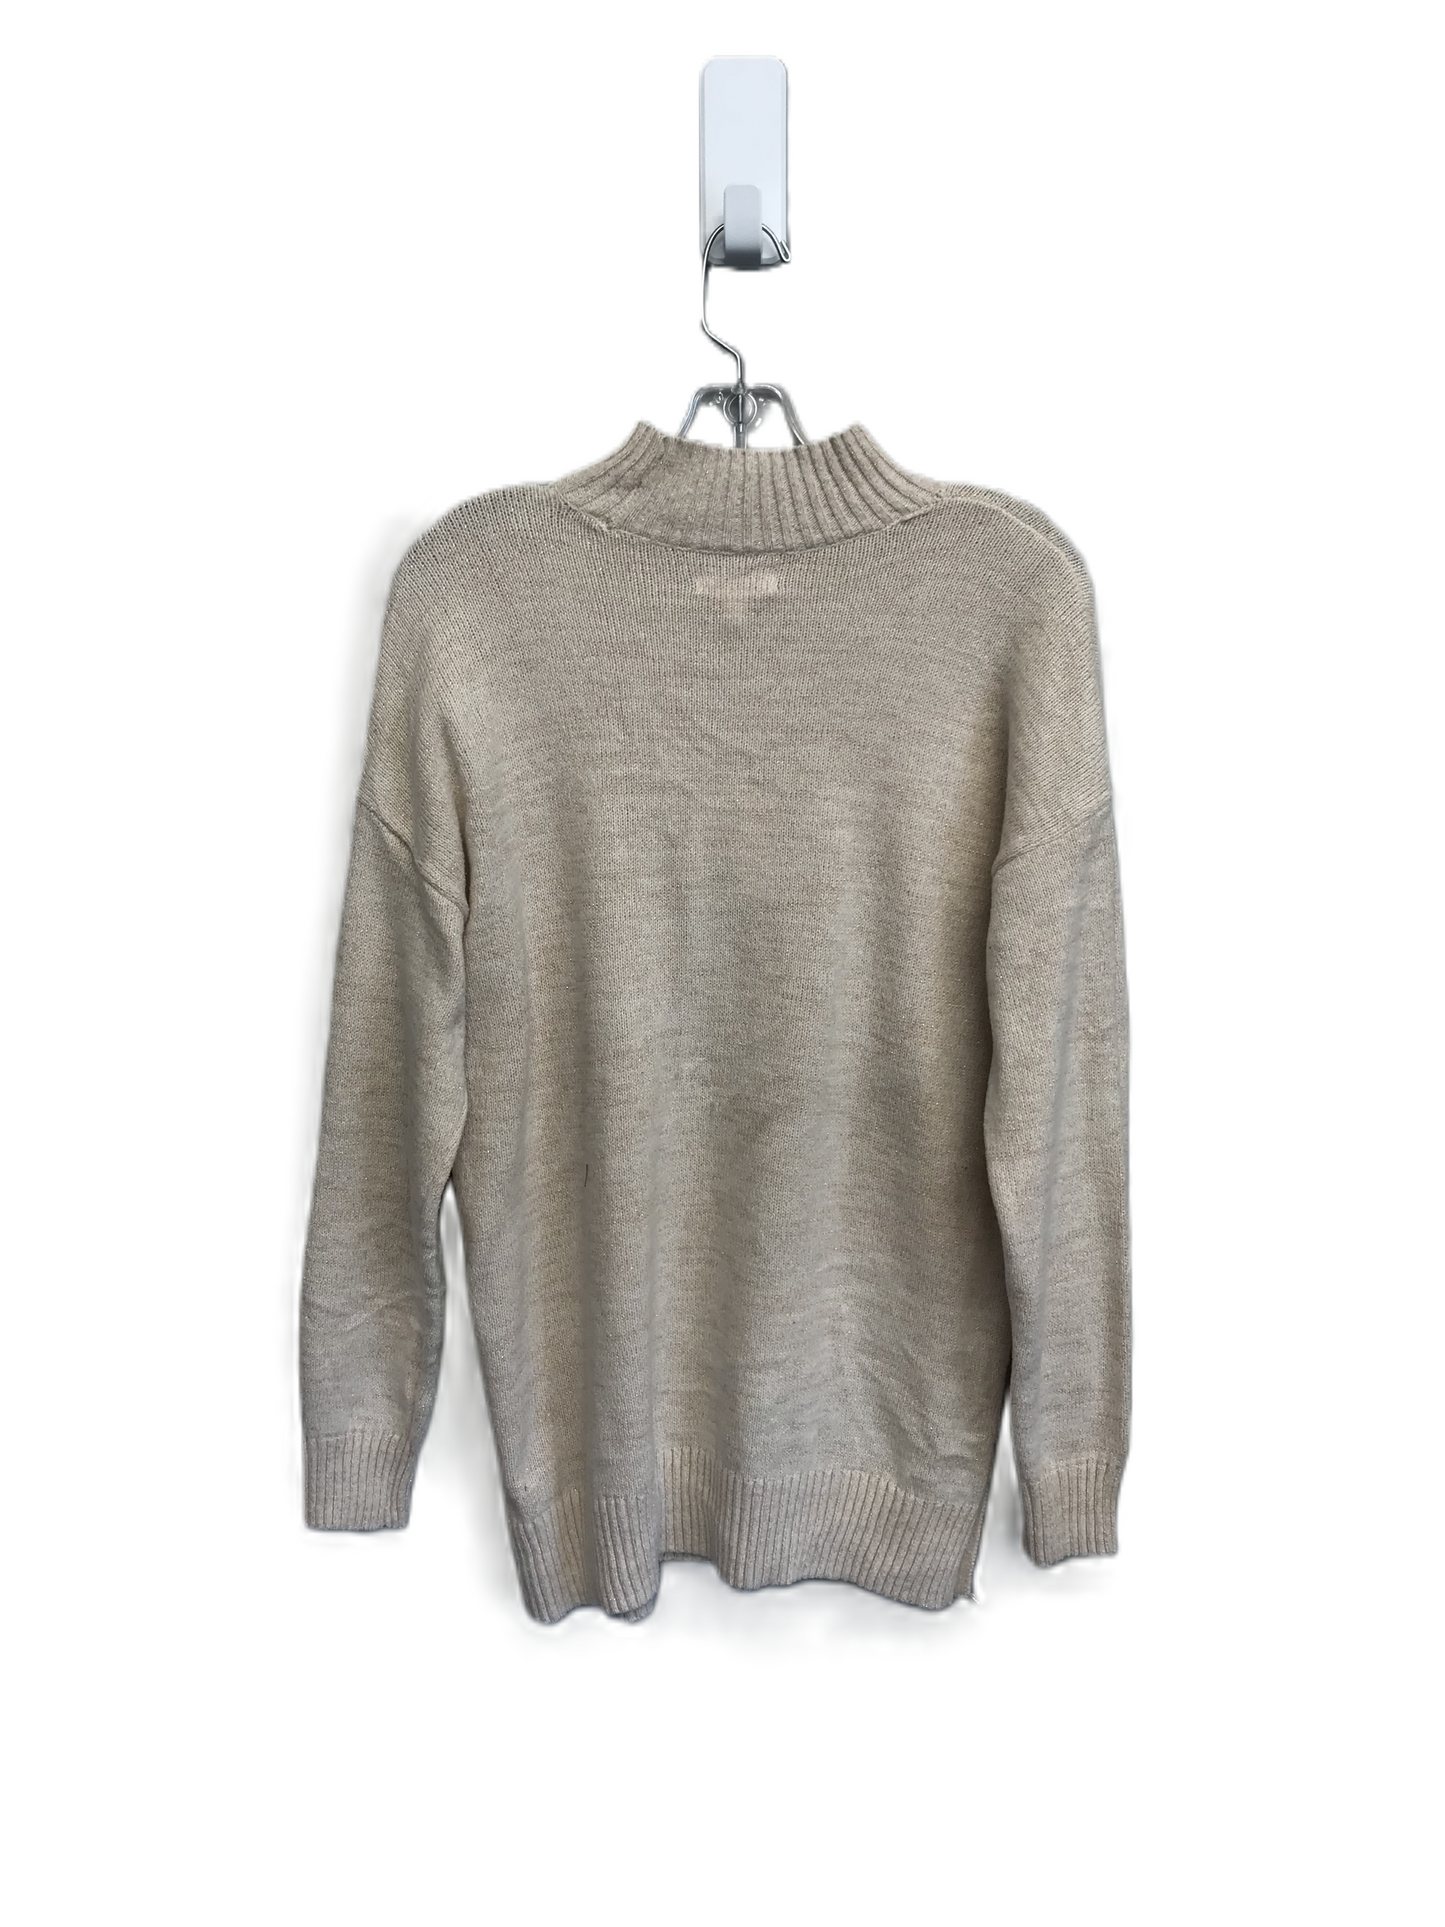 Beige Sweater By Lc Lauren Conrad, Size: M